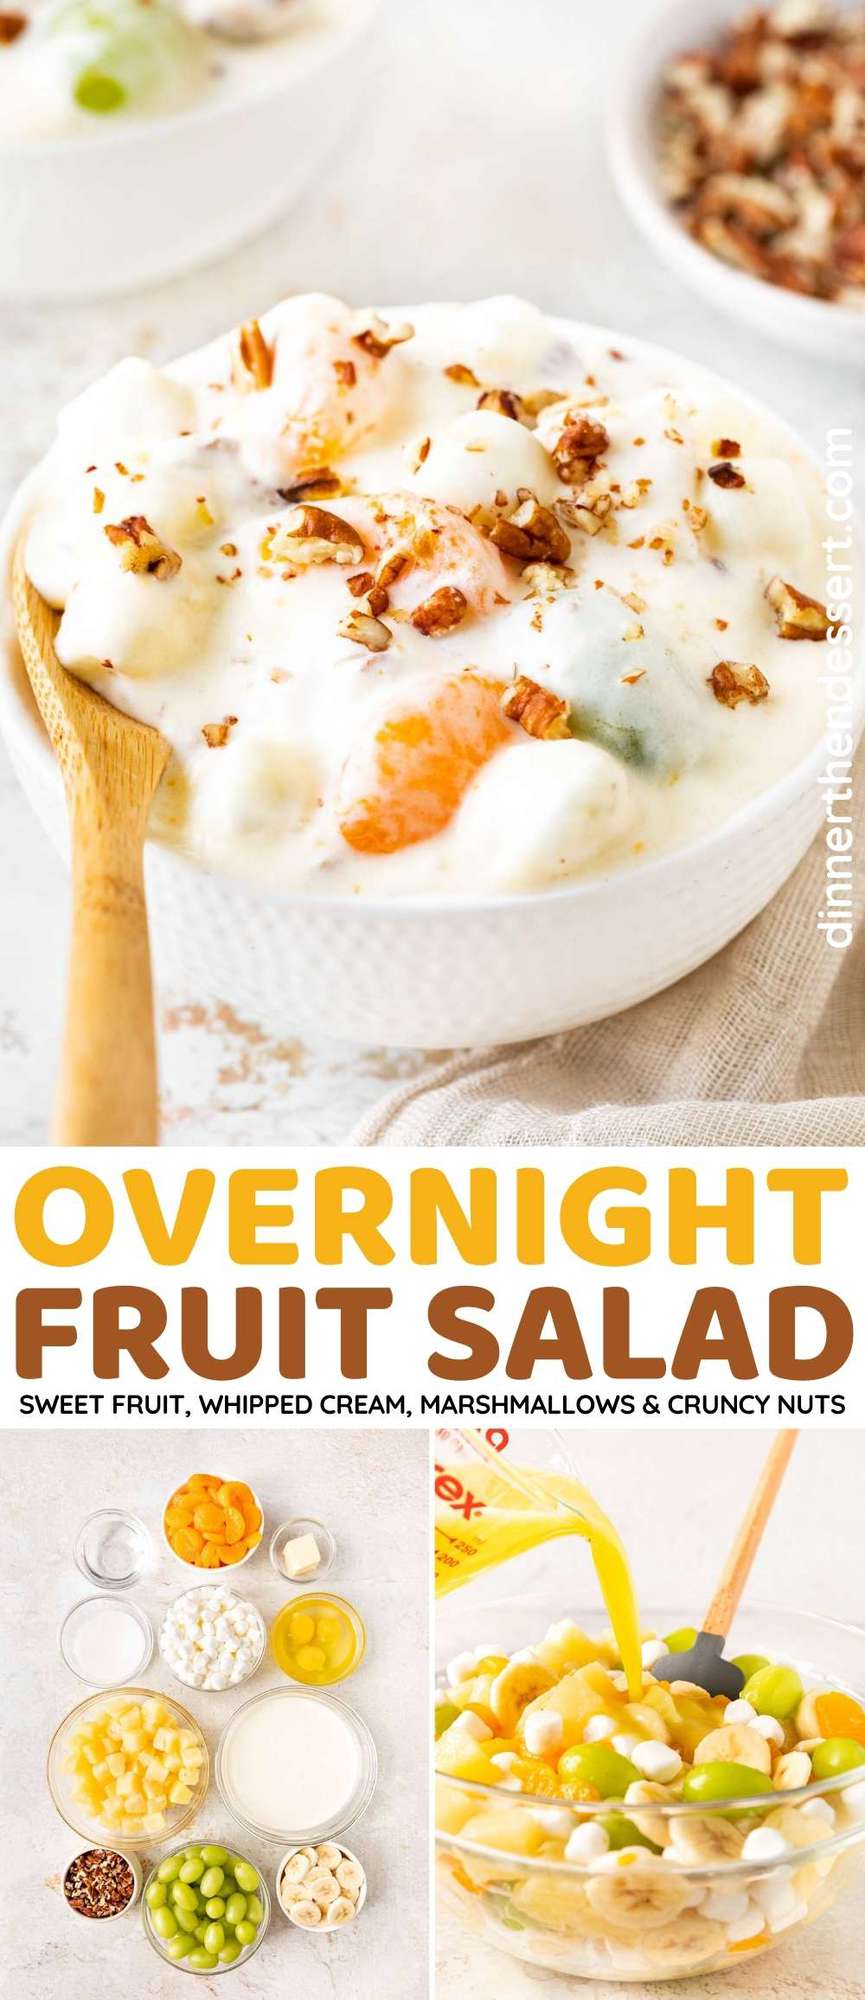 Overnight Fruit Salad Collage